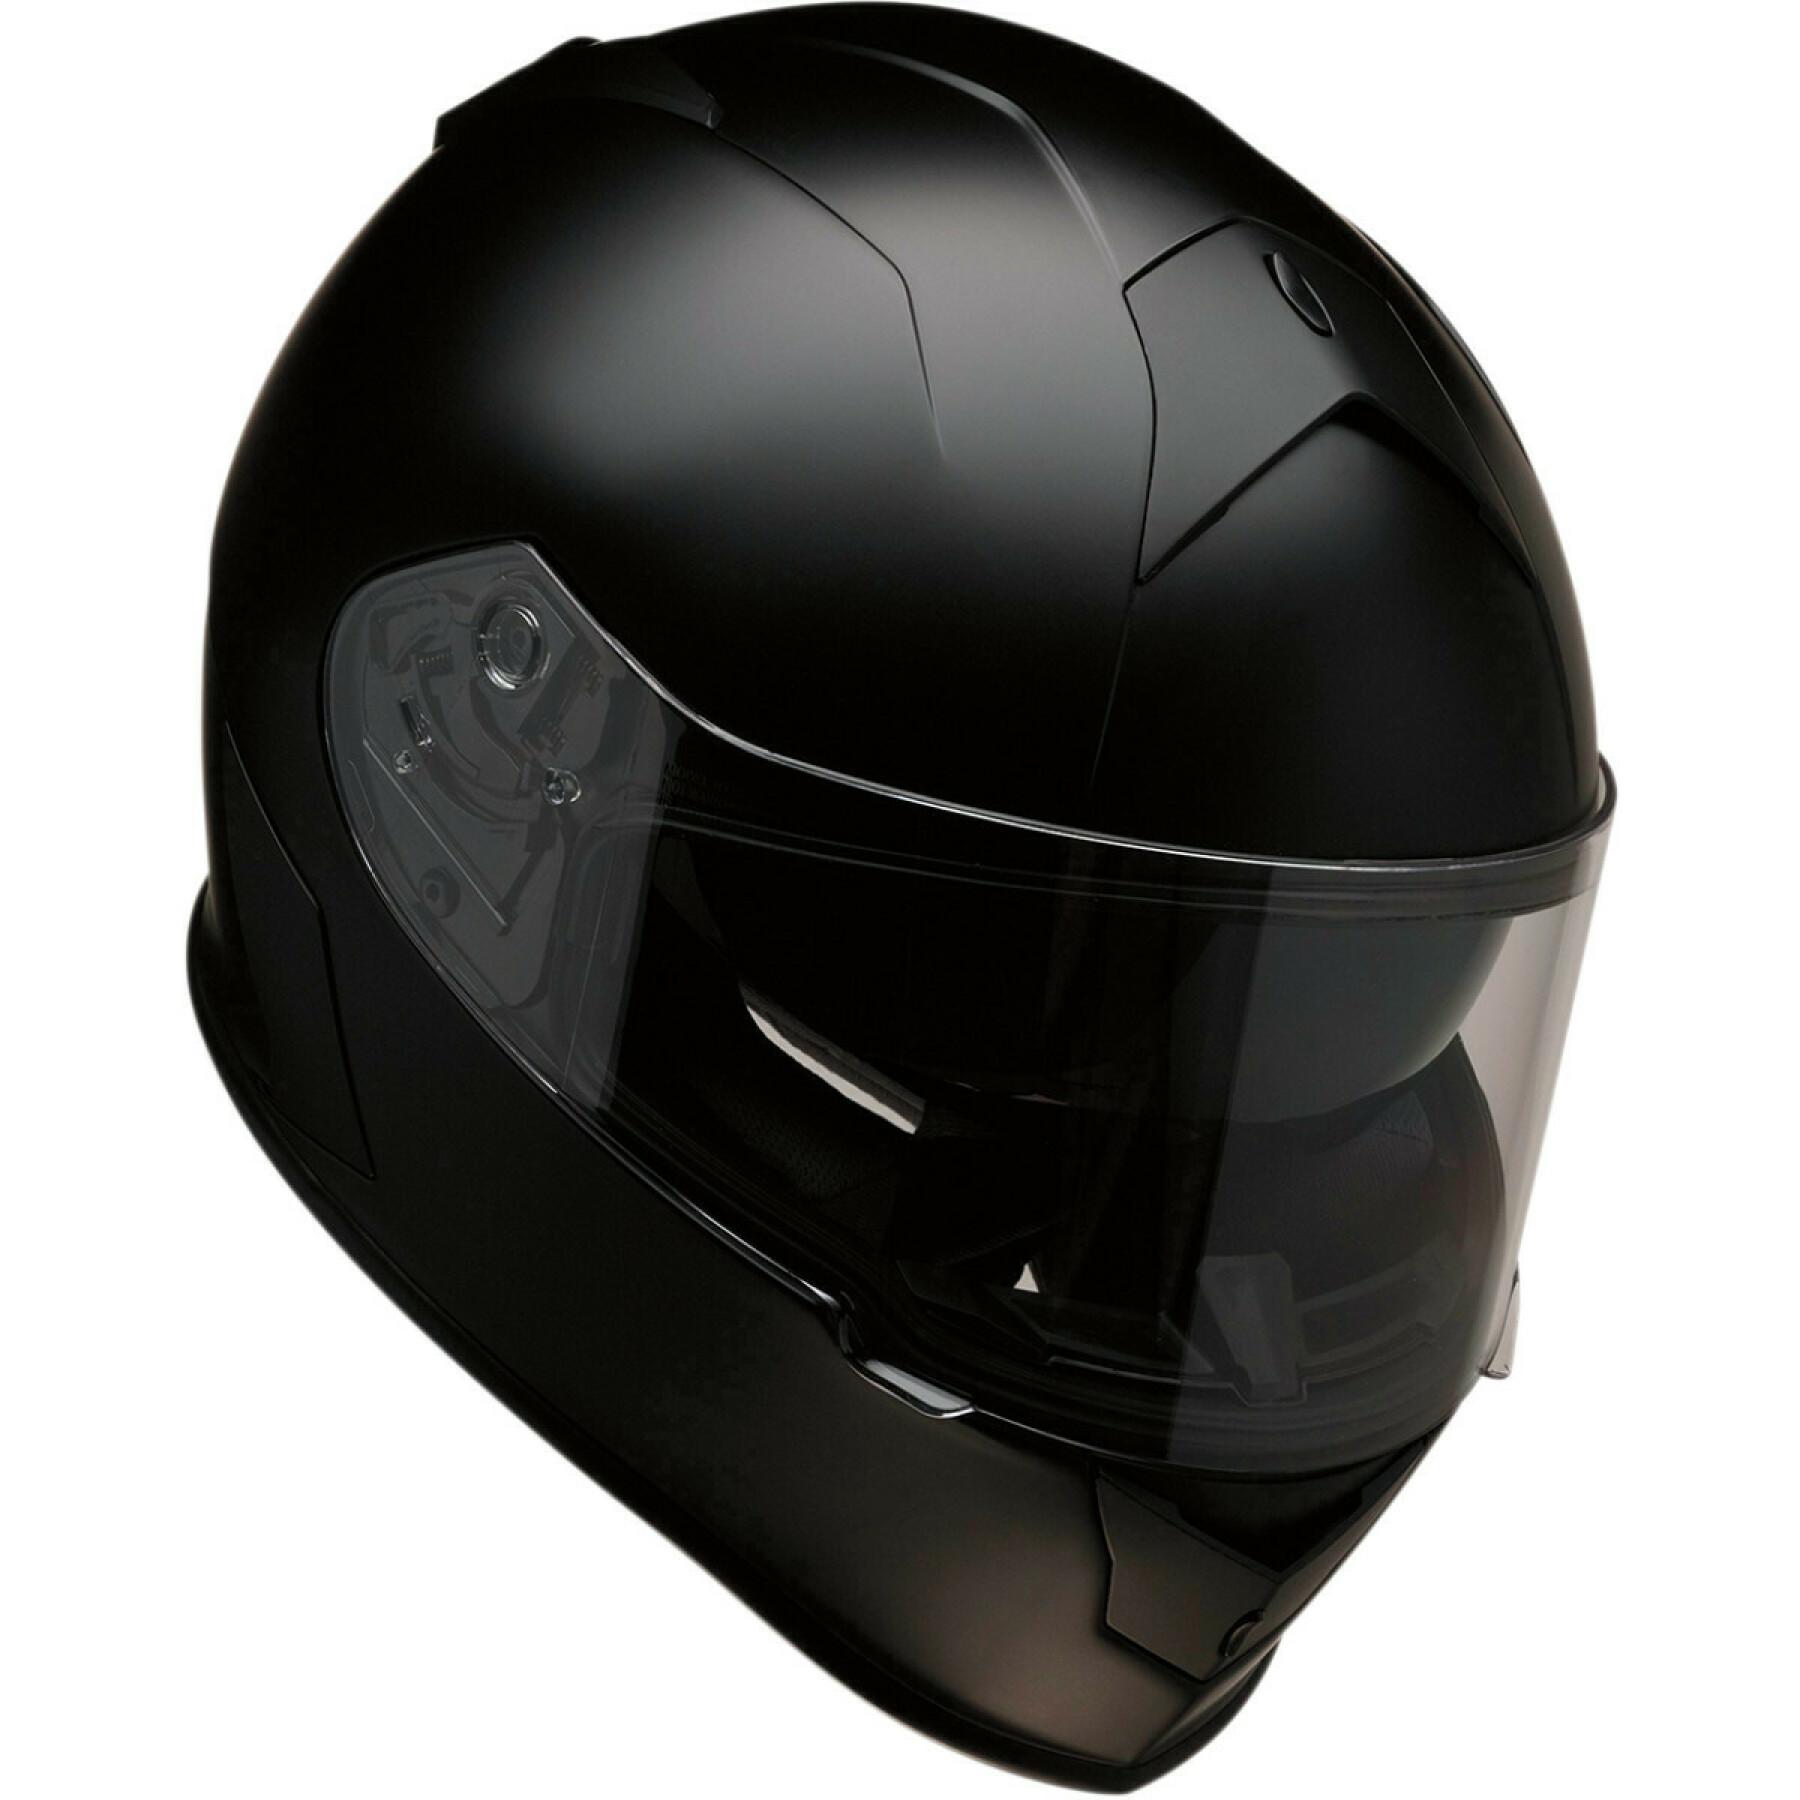 Full face motorcycle helmet Z1R warrant flat